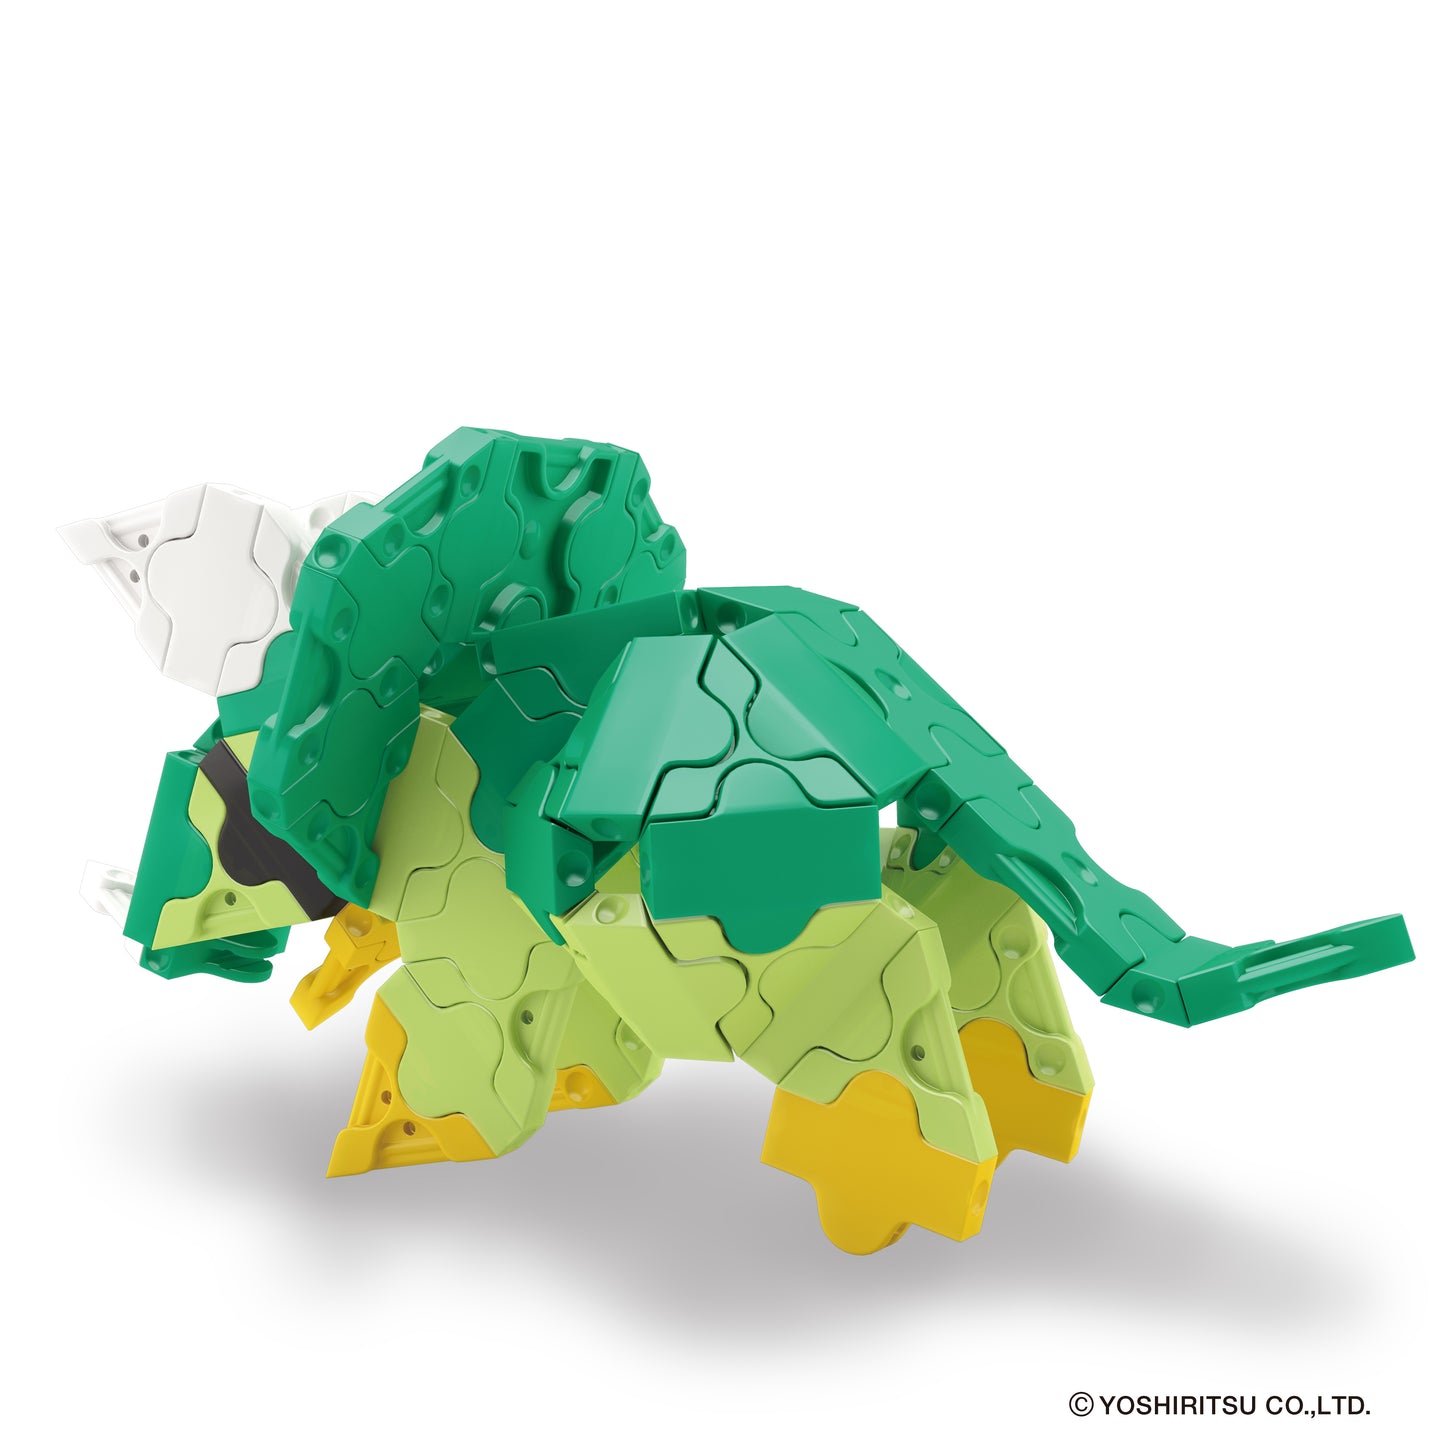 LaQ Dinosaur World Mini Triceratops